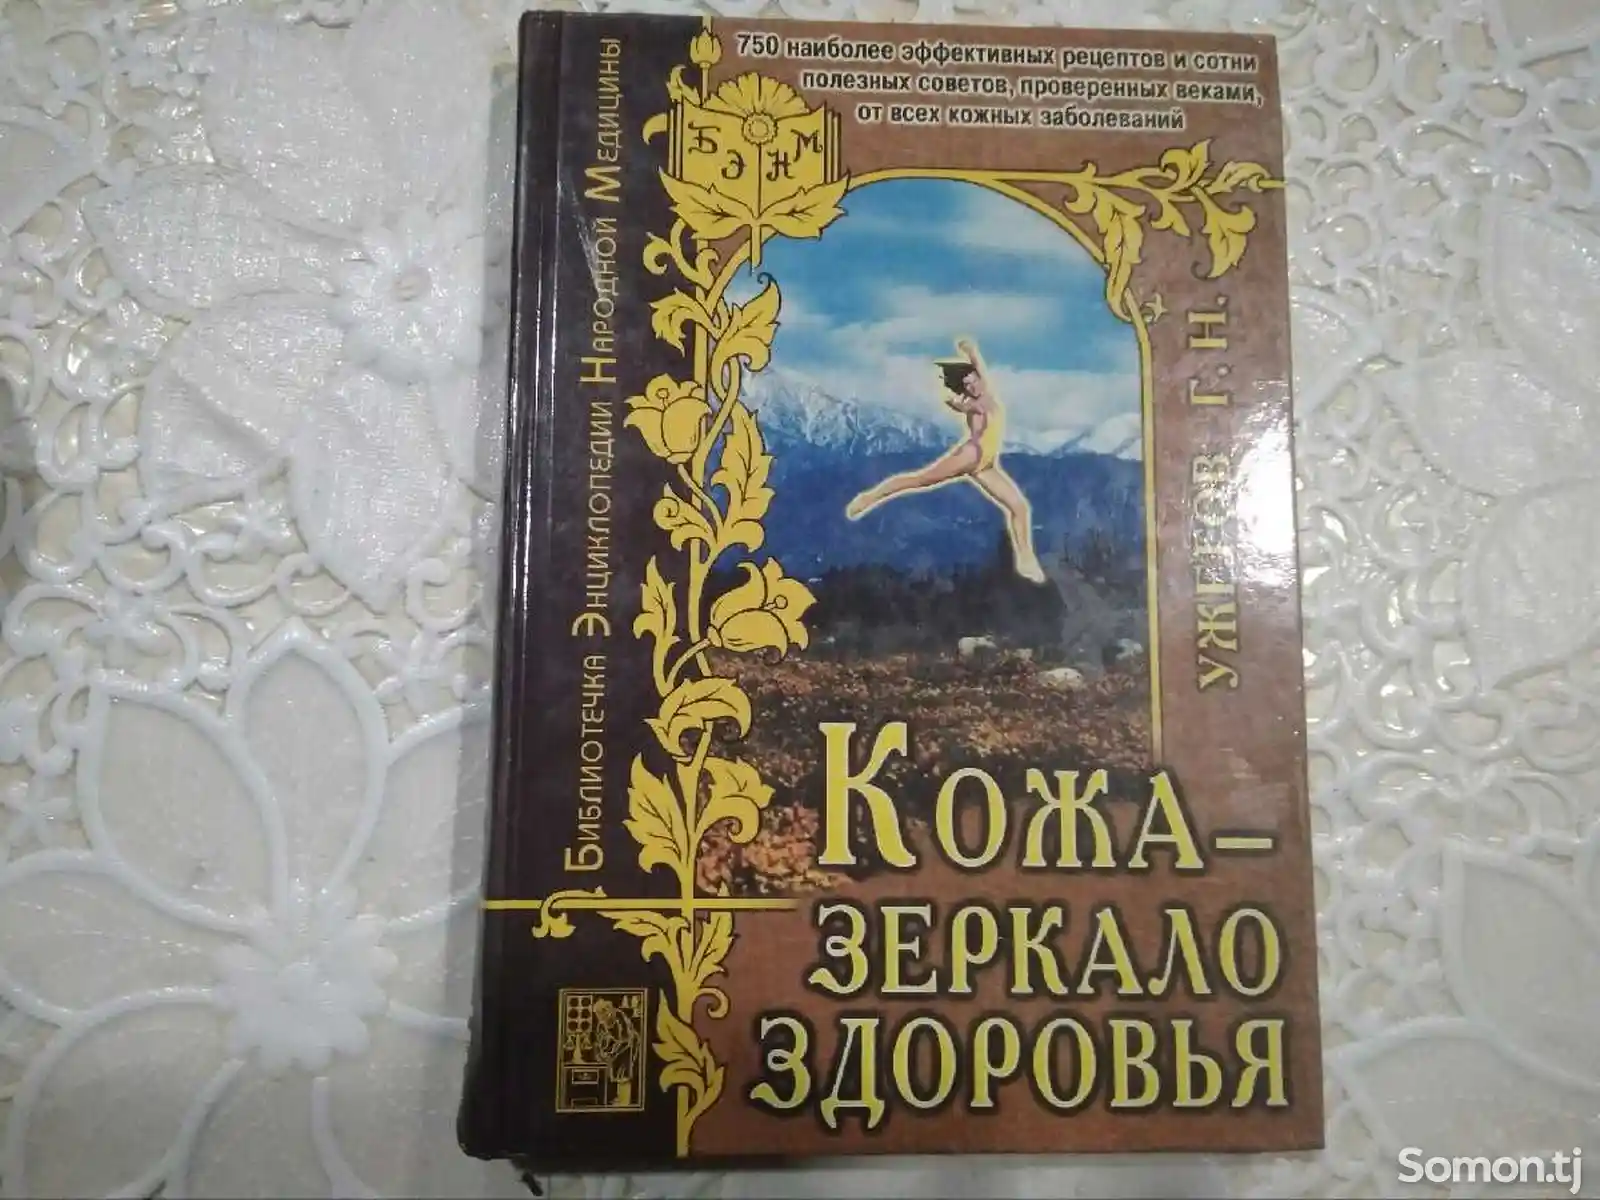 Книга про народную медицину-1